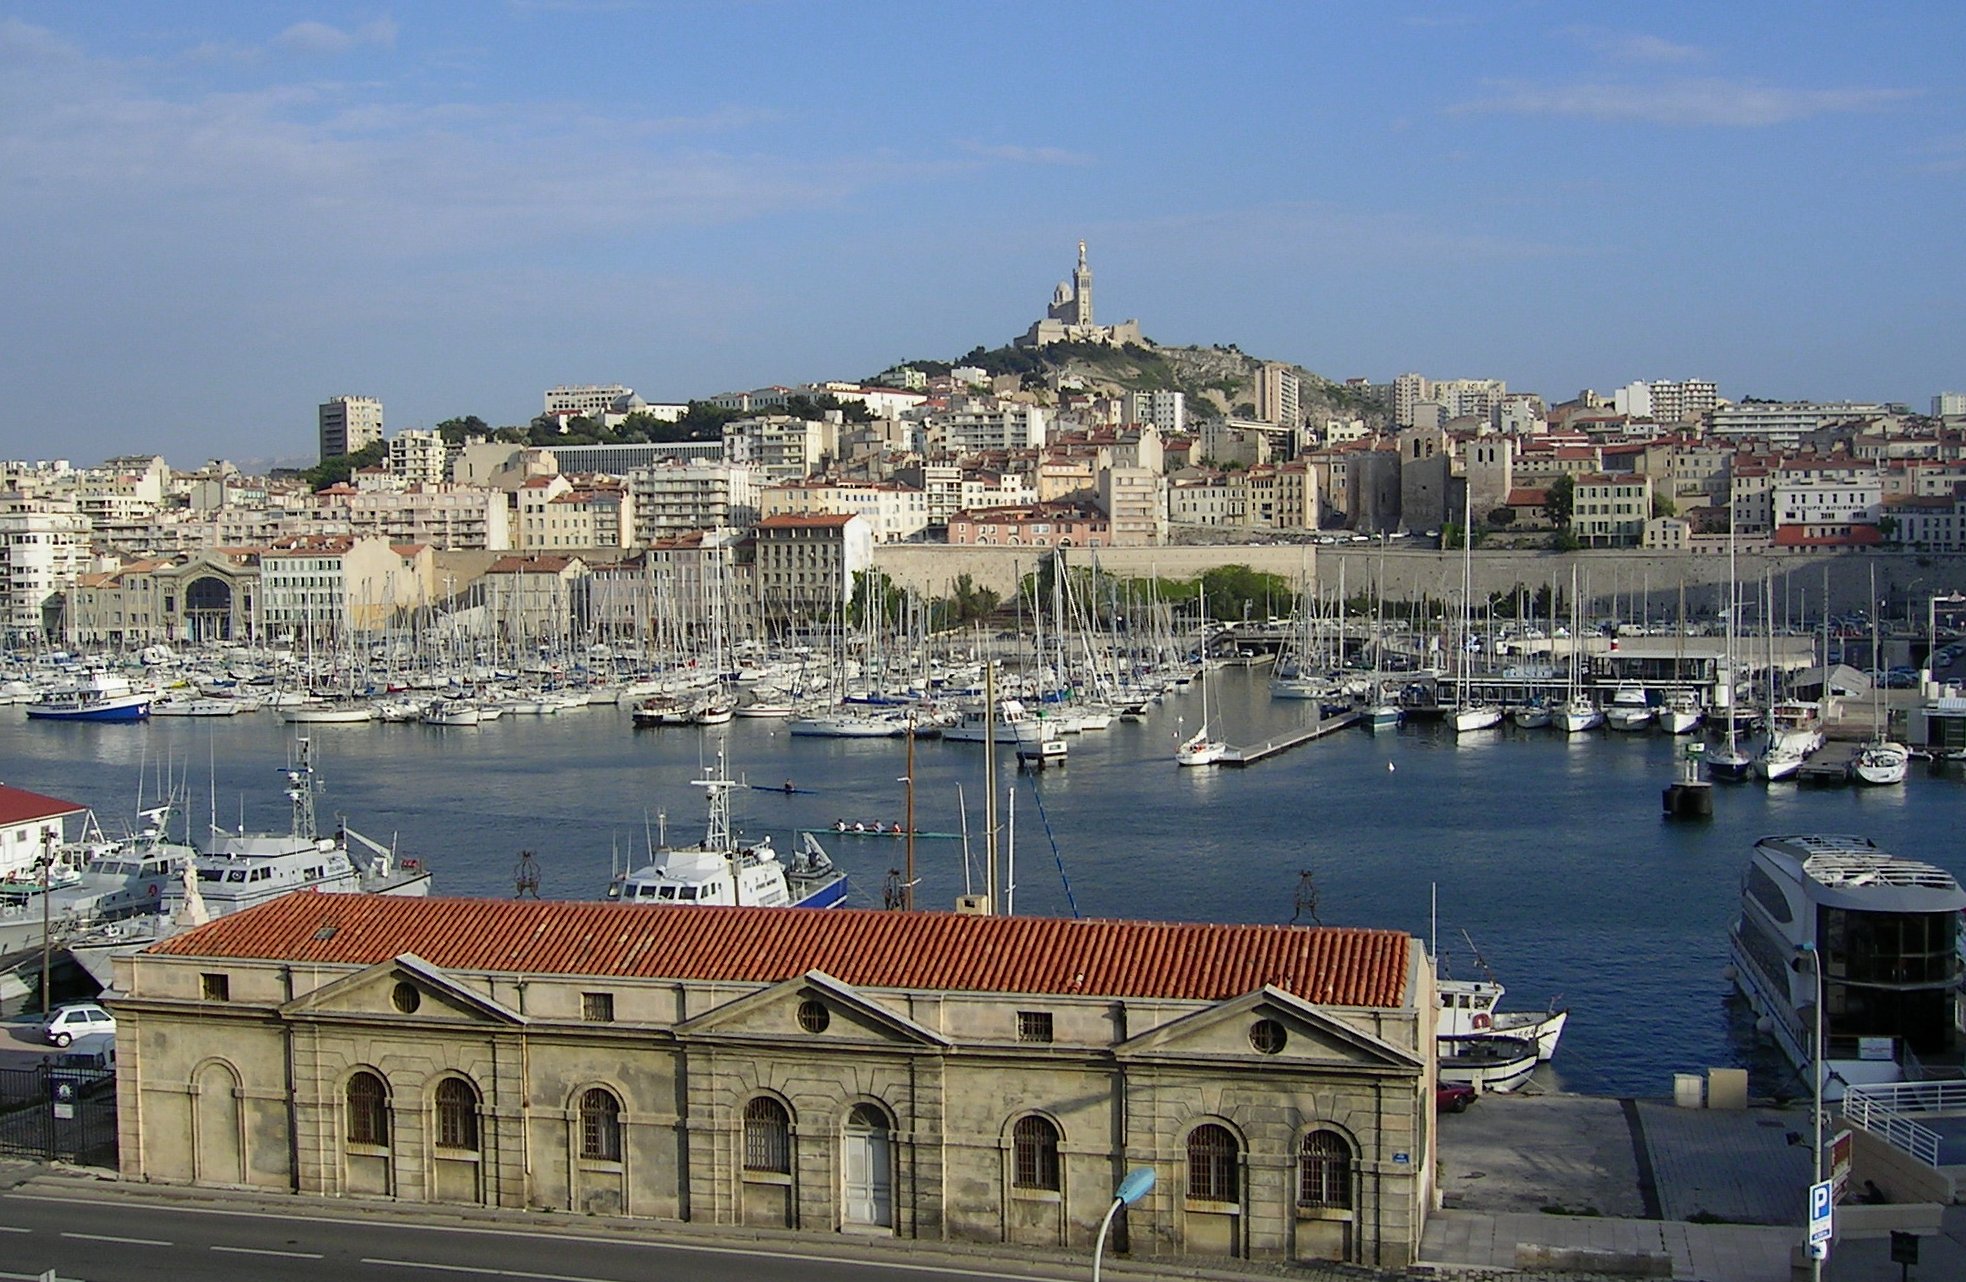 sli_frz_Vieux_port_de_Marseille_2.jpg